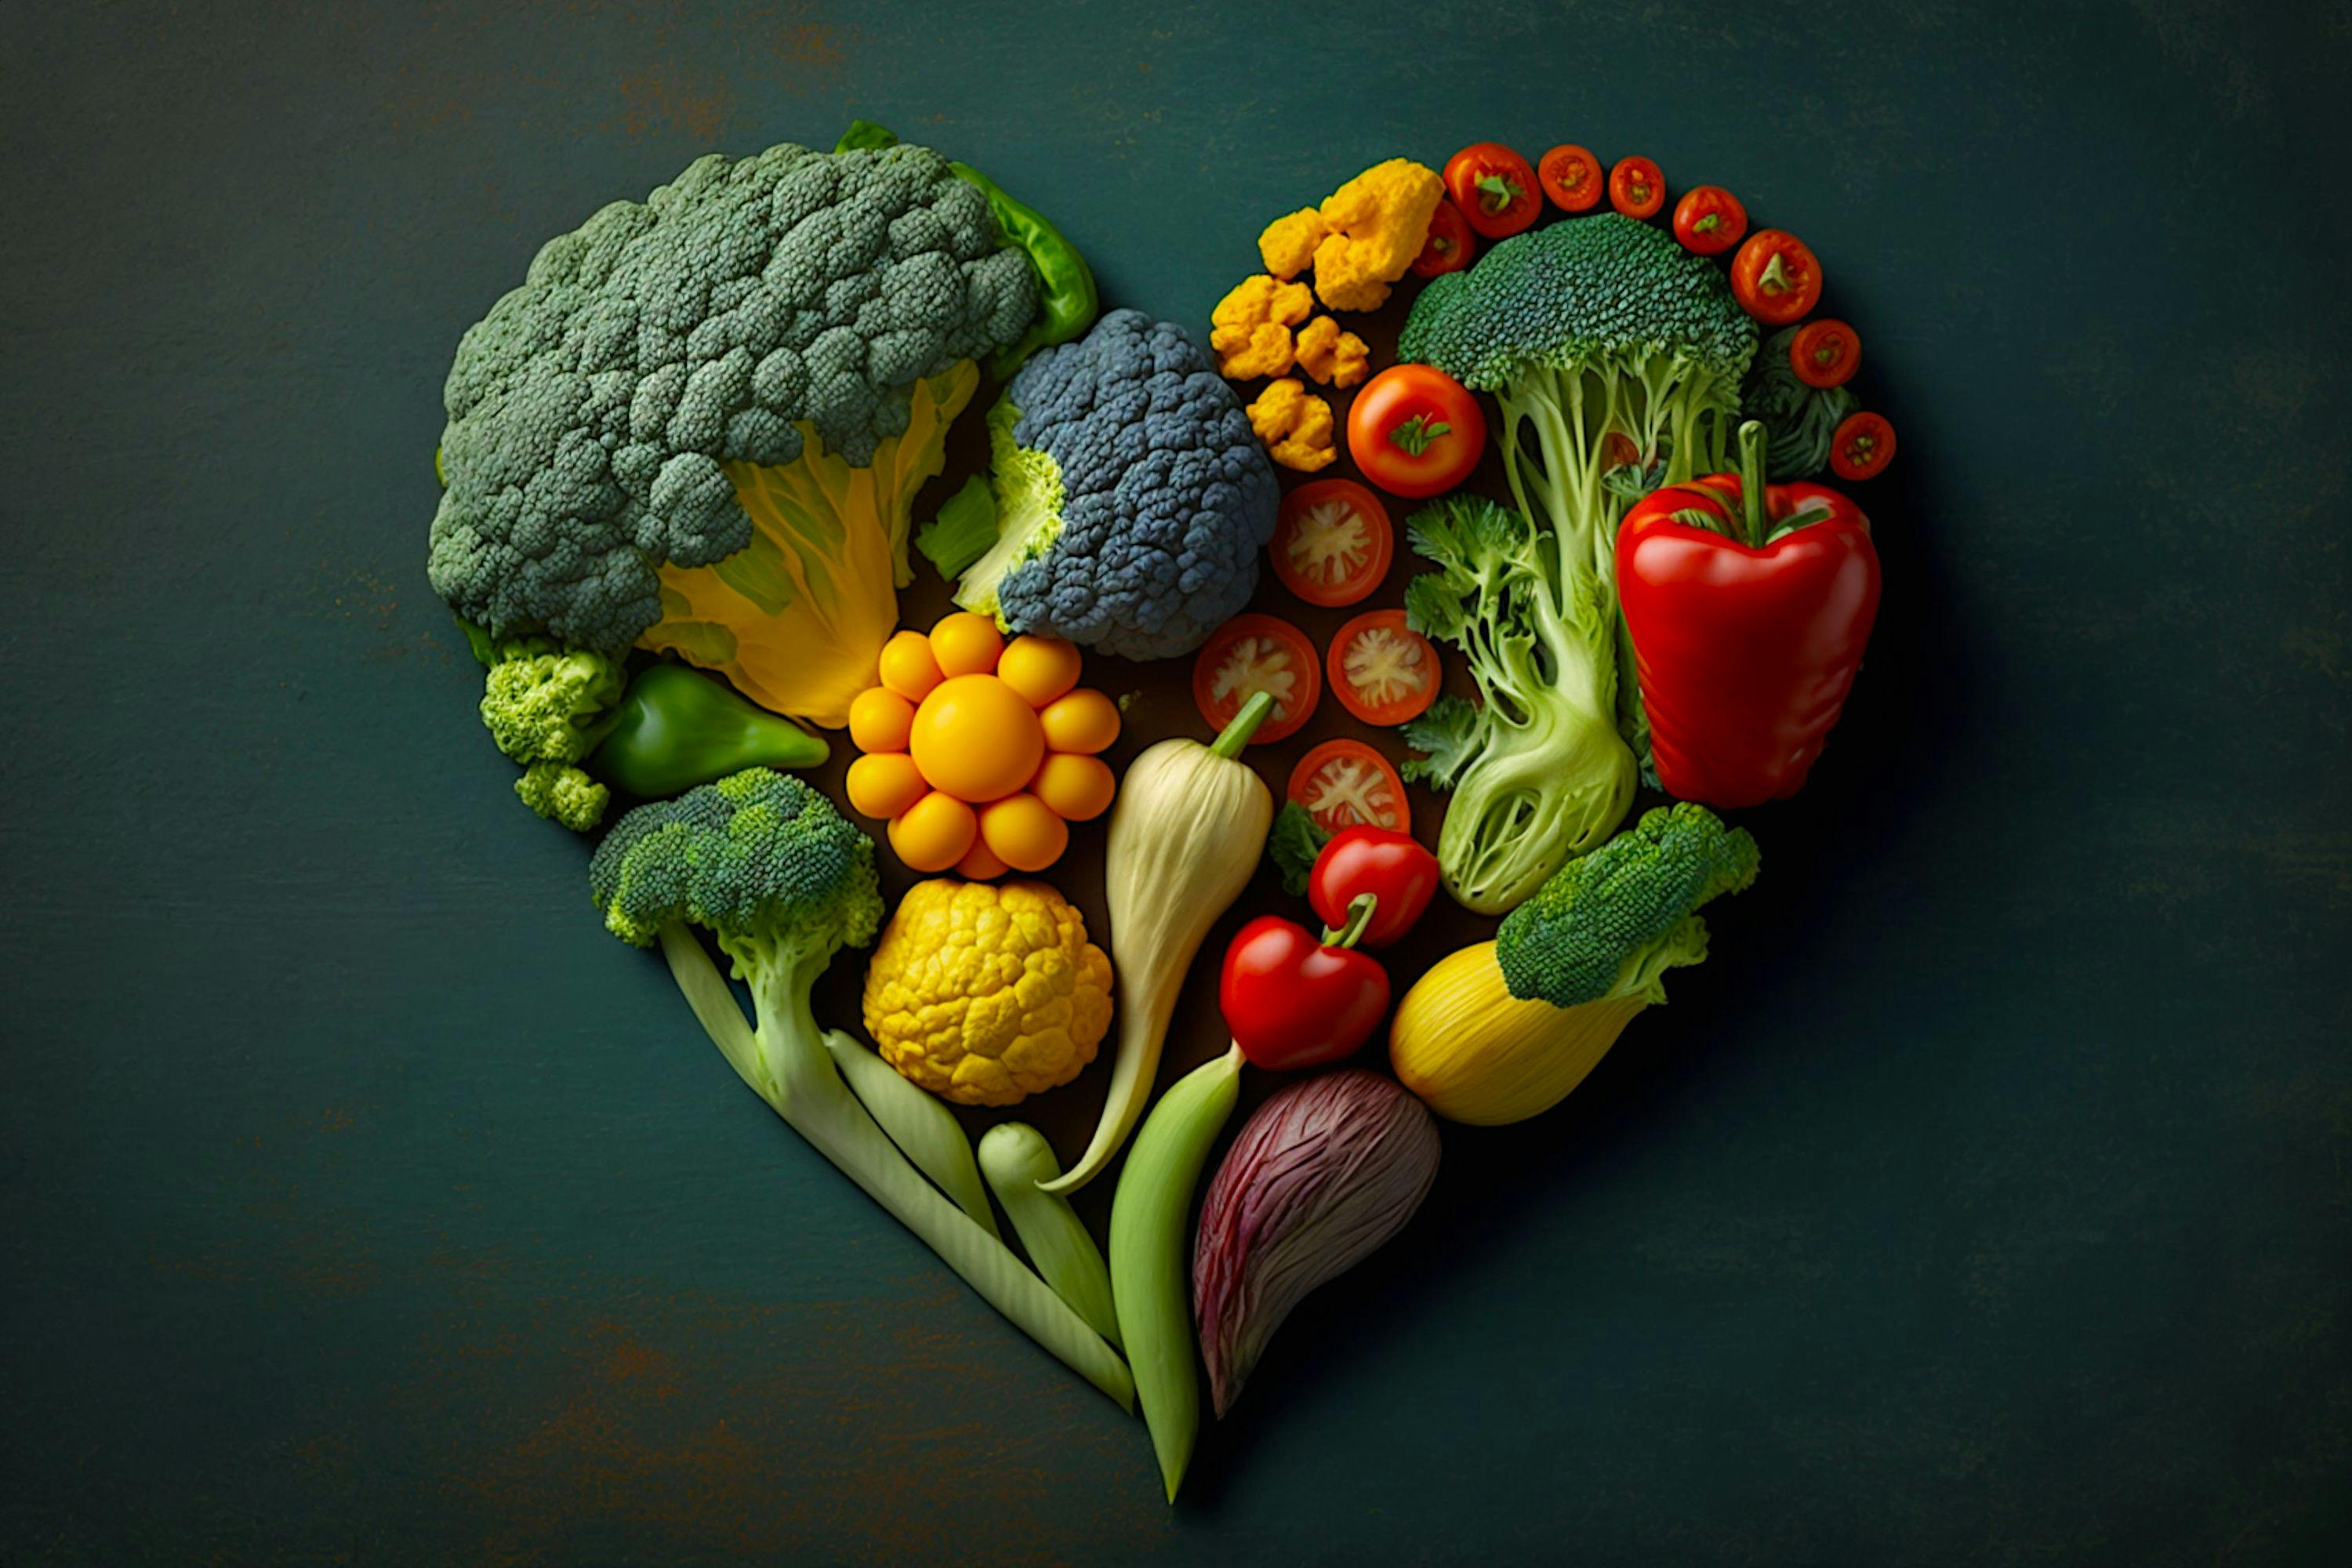 Heart made of vegetables | Image Credit: PaulSat - stock.adobe.com